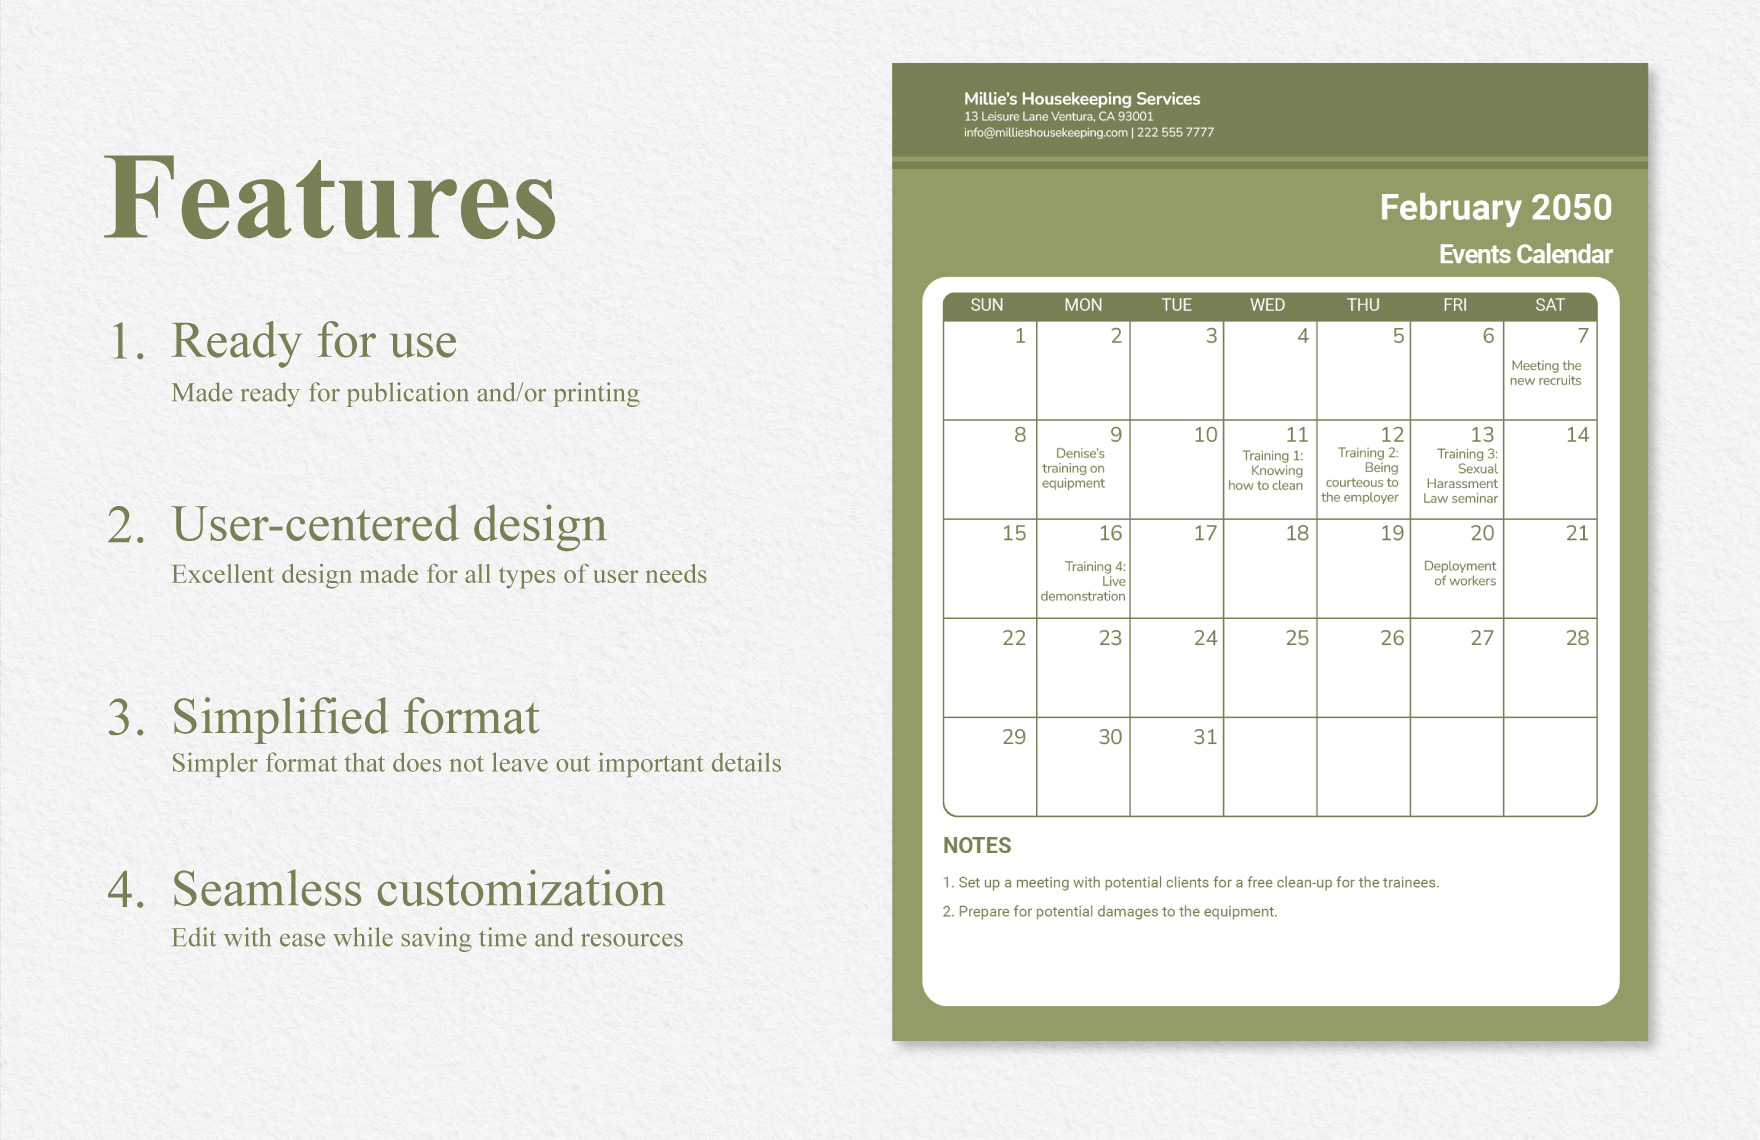 Housekeeping Training Calendar Template in MS Word, Illustrator